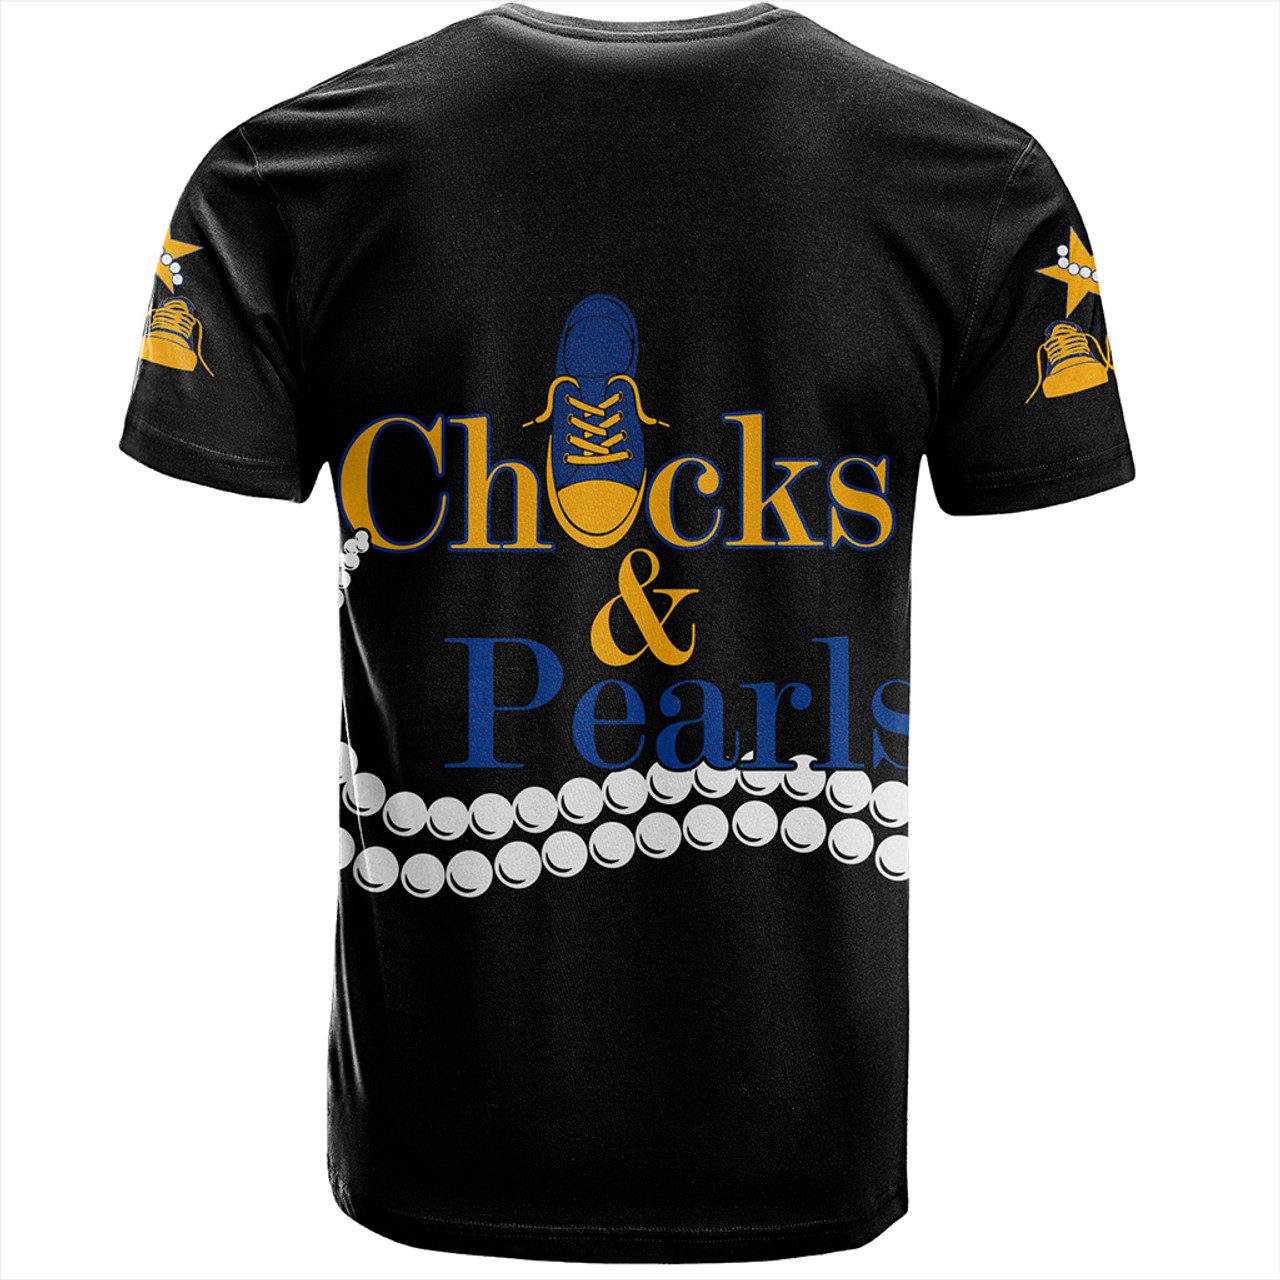 Sigma Gamma Rho T-Shirt K.H Chuck And Pearls